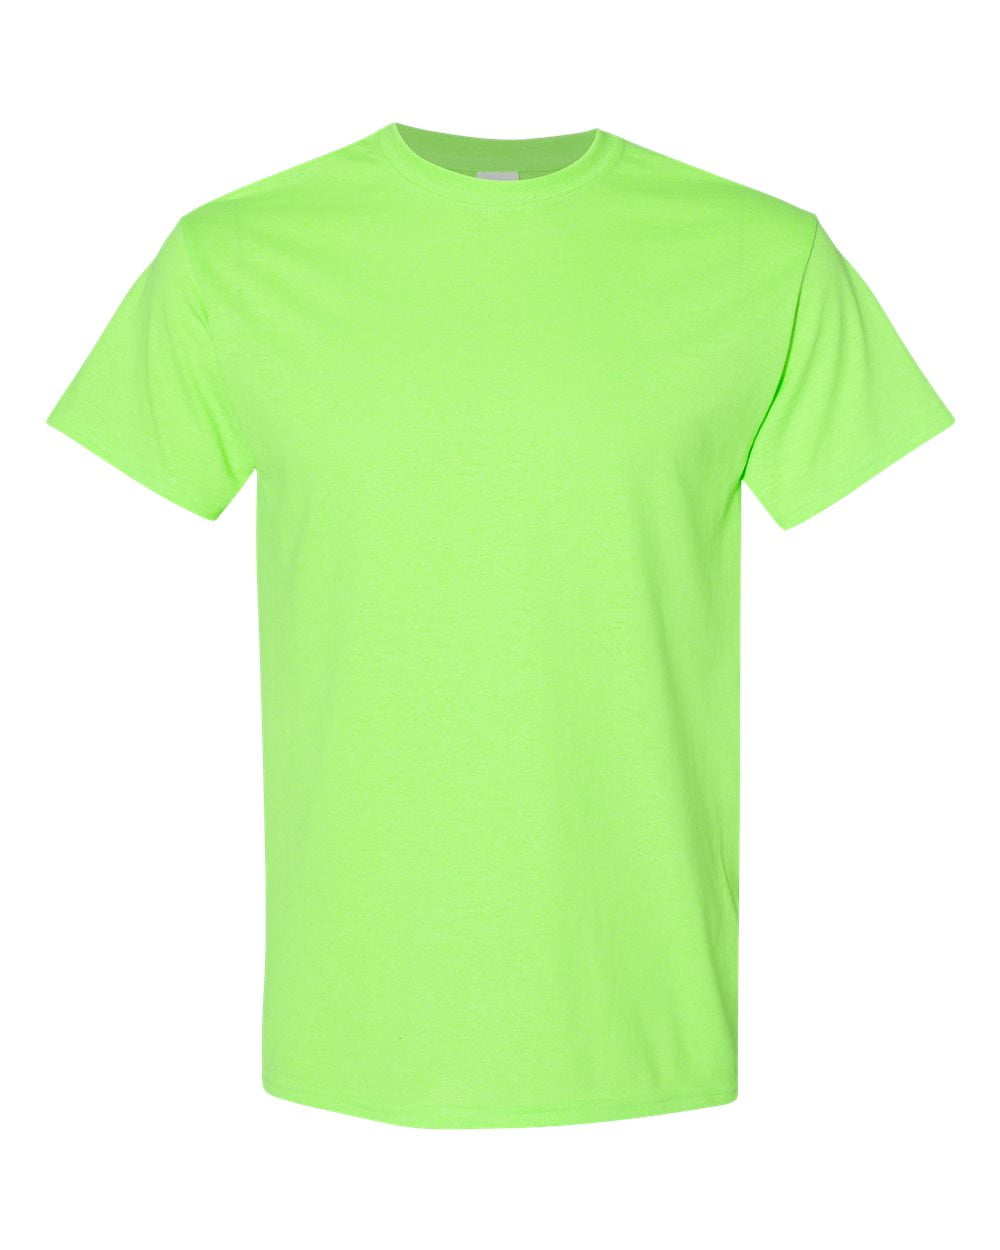 Heavy Cotton T-Shirt, S, Neon Green - Walmart.com